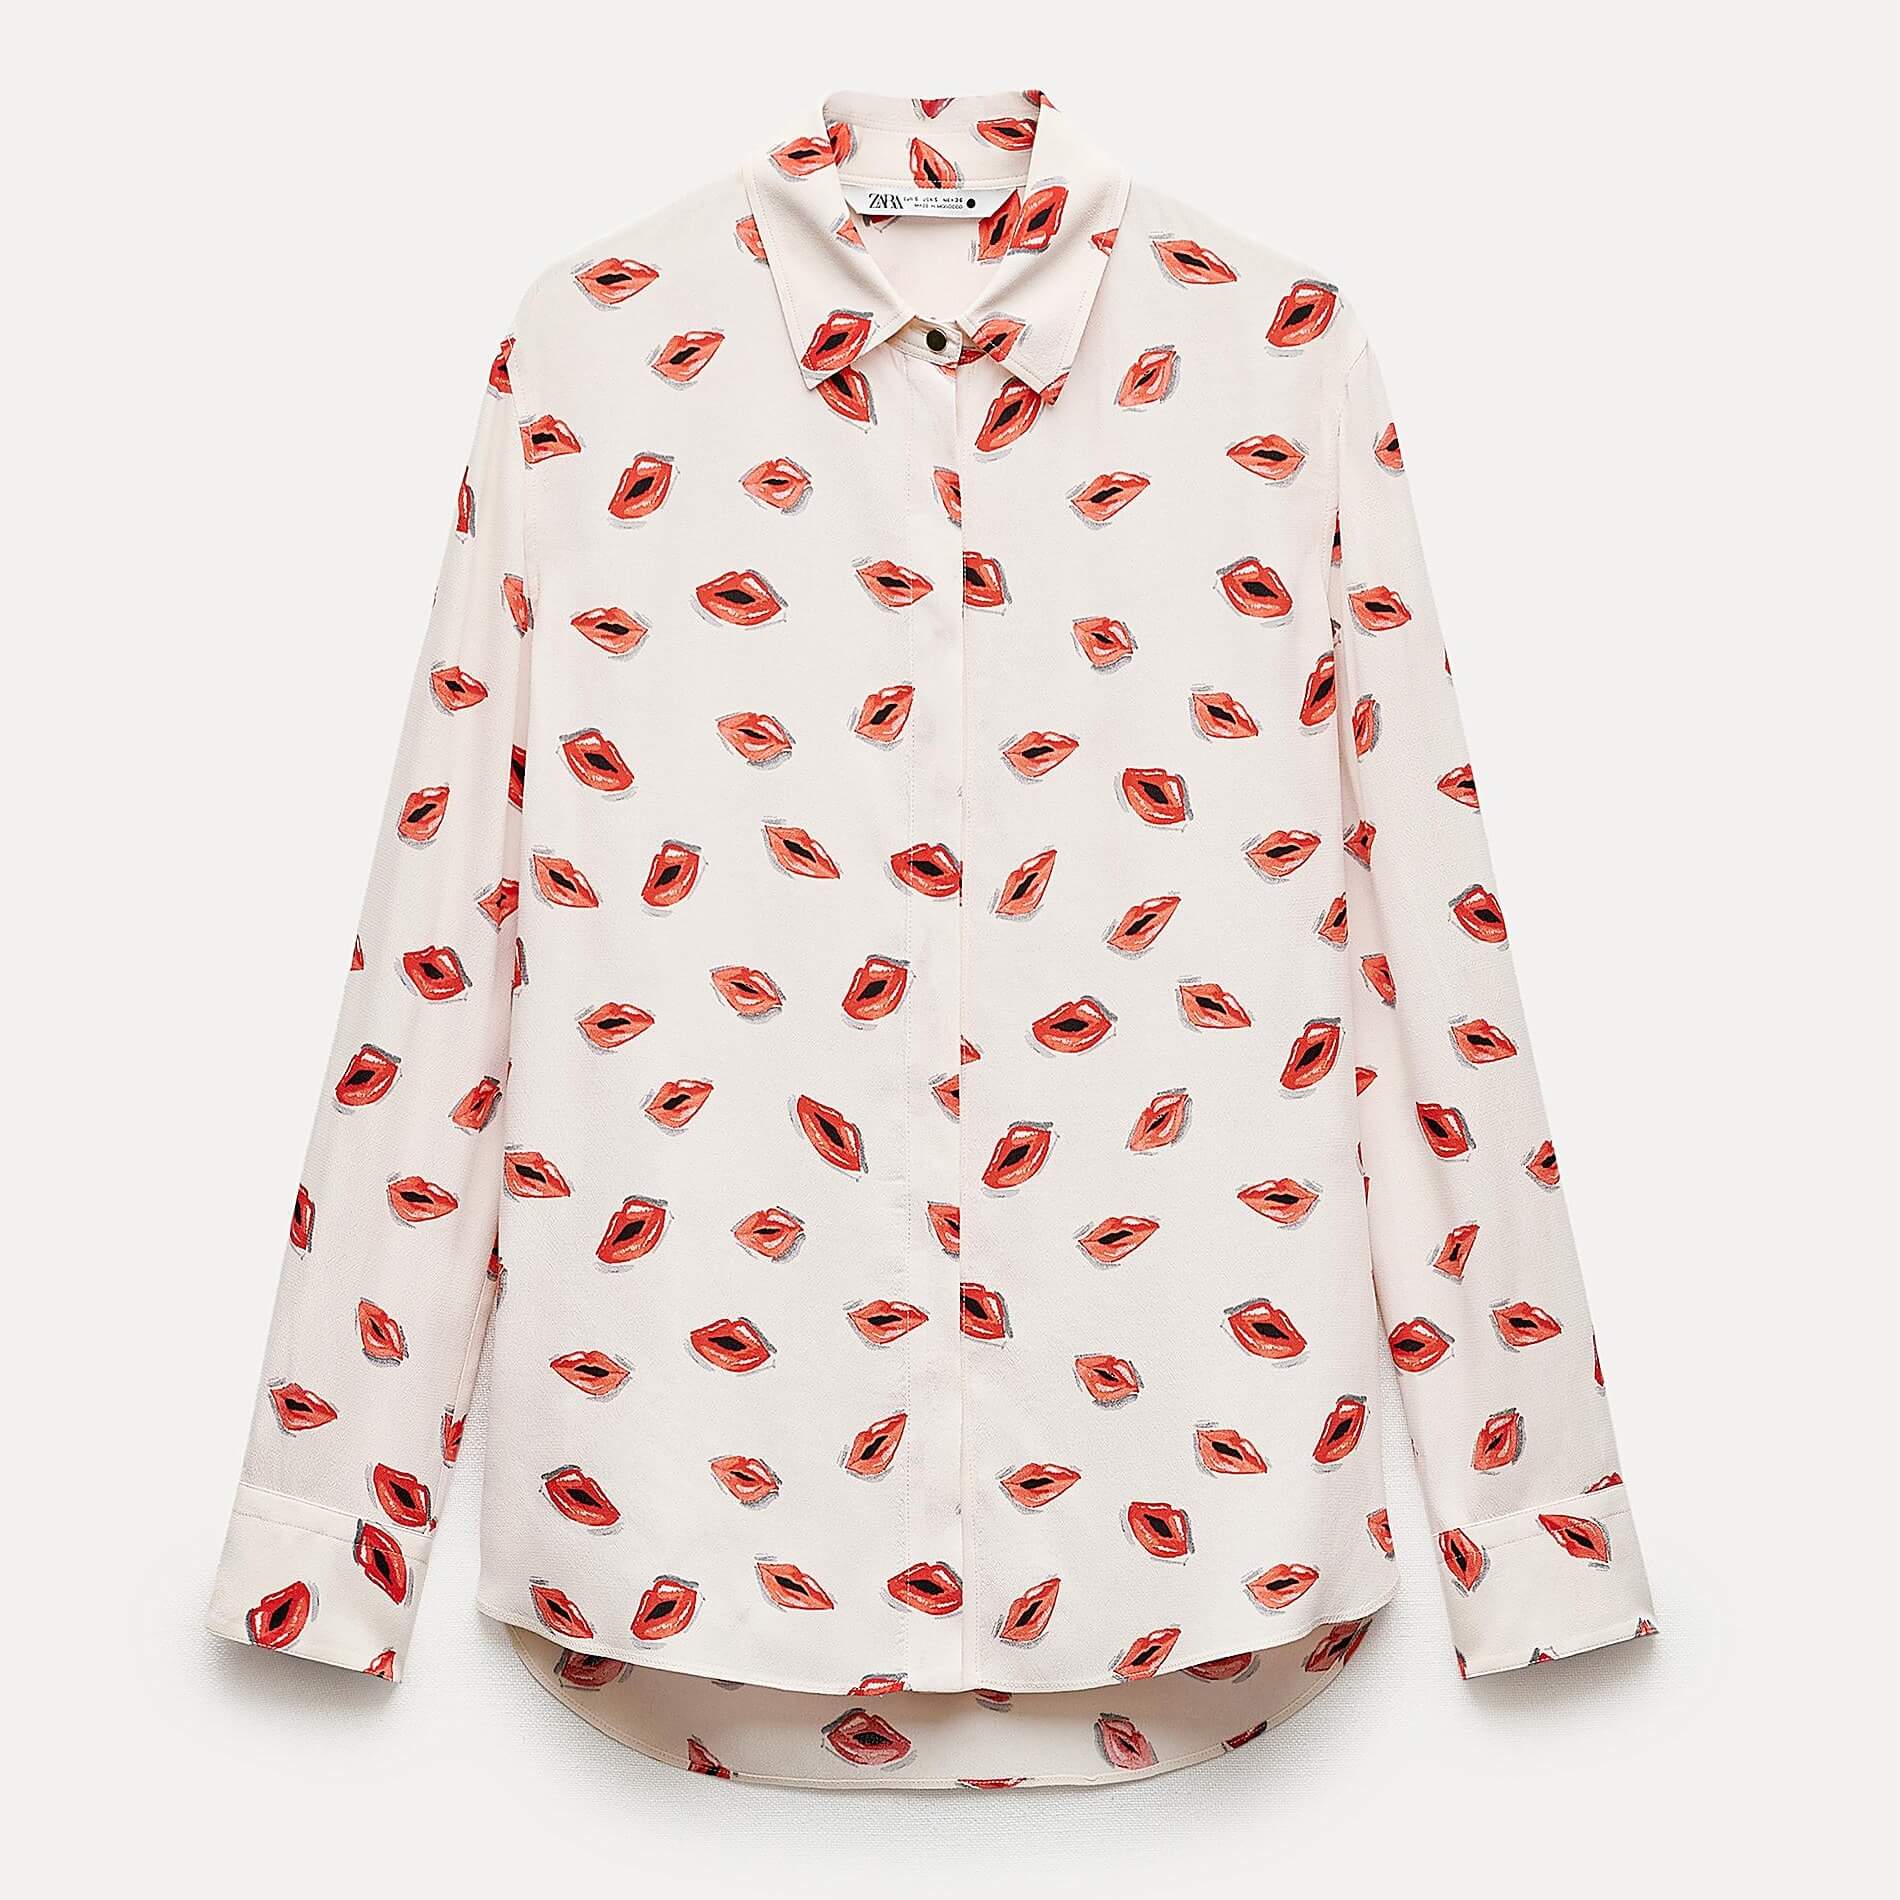 Рубашка Zara ZW Collection Printed, светло-бежевый/красный рубашка zara zw collection printed светло бежевый красный